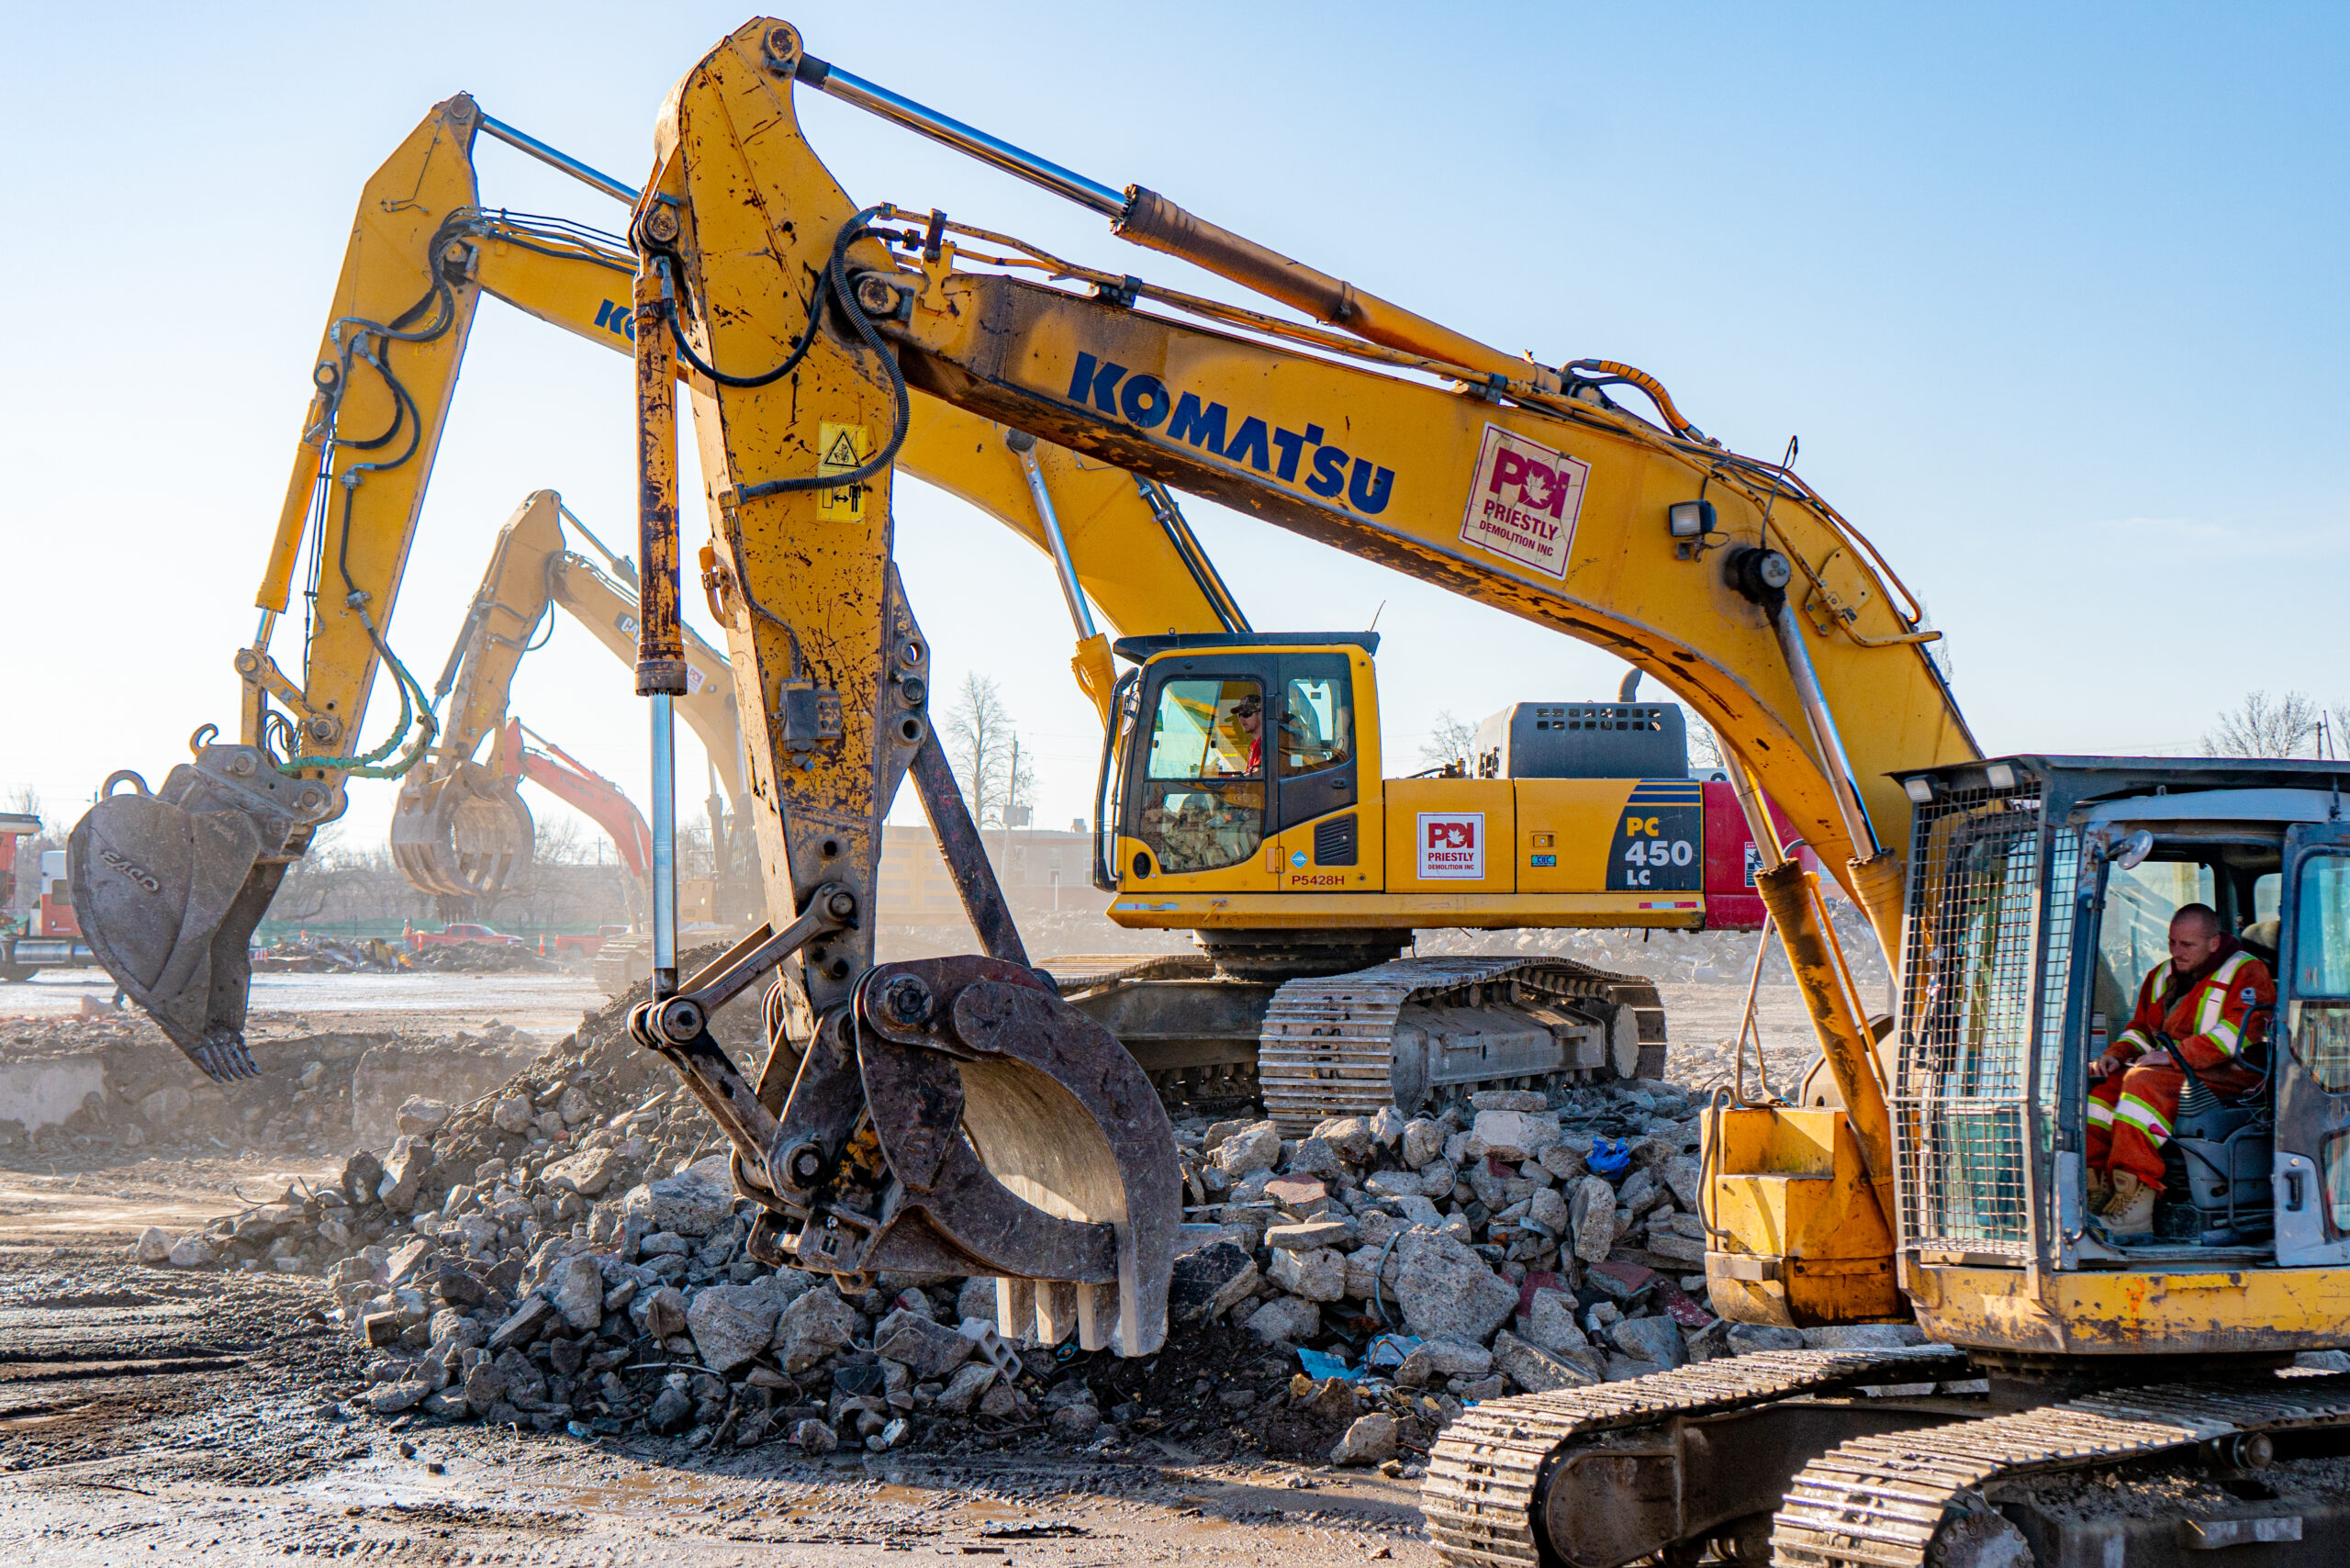 Komatus excavators working on an industrial demolition project